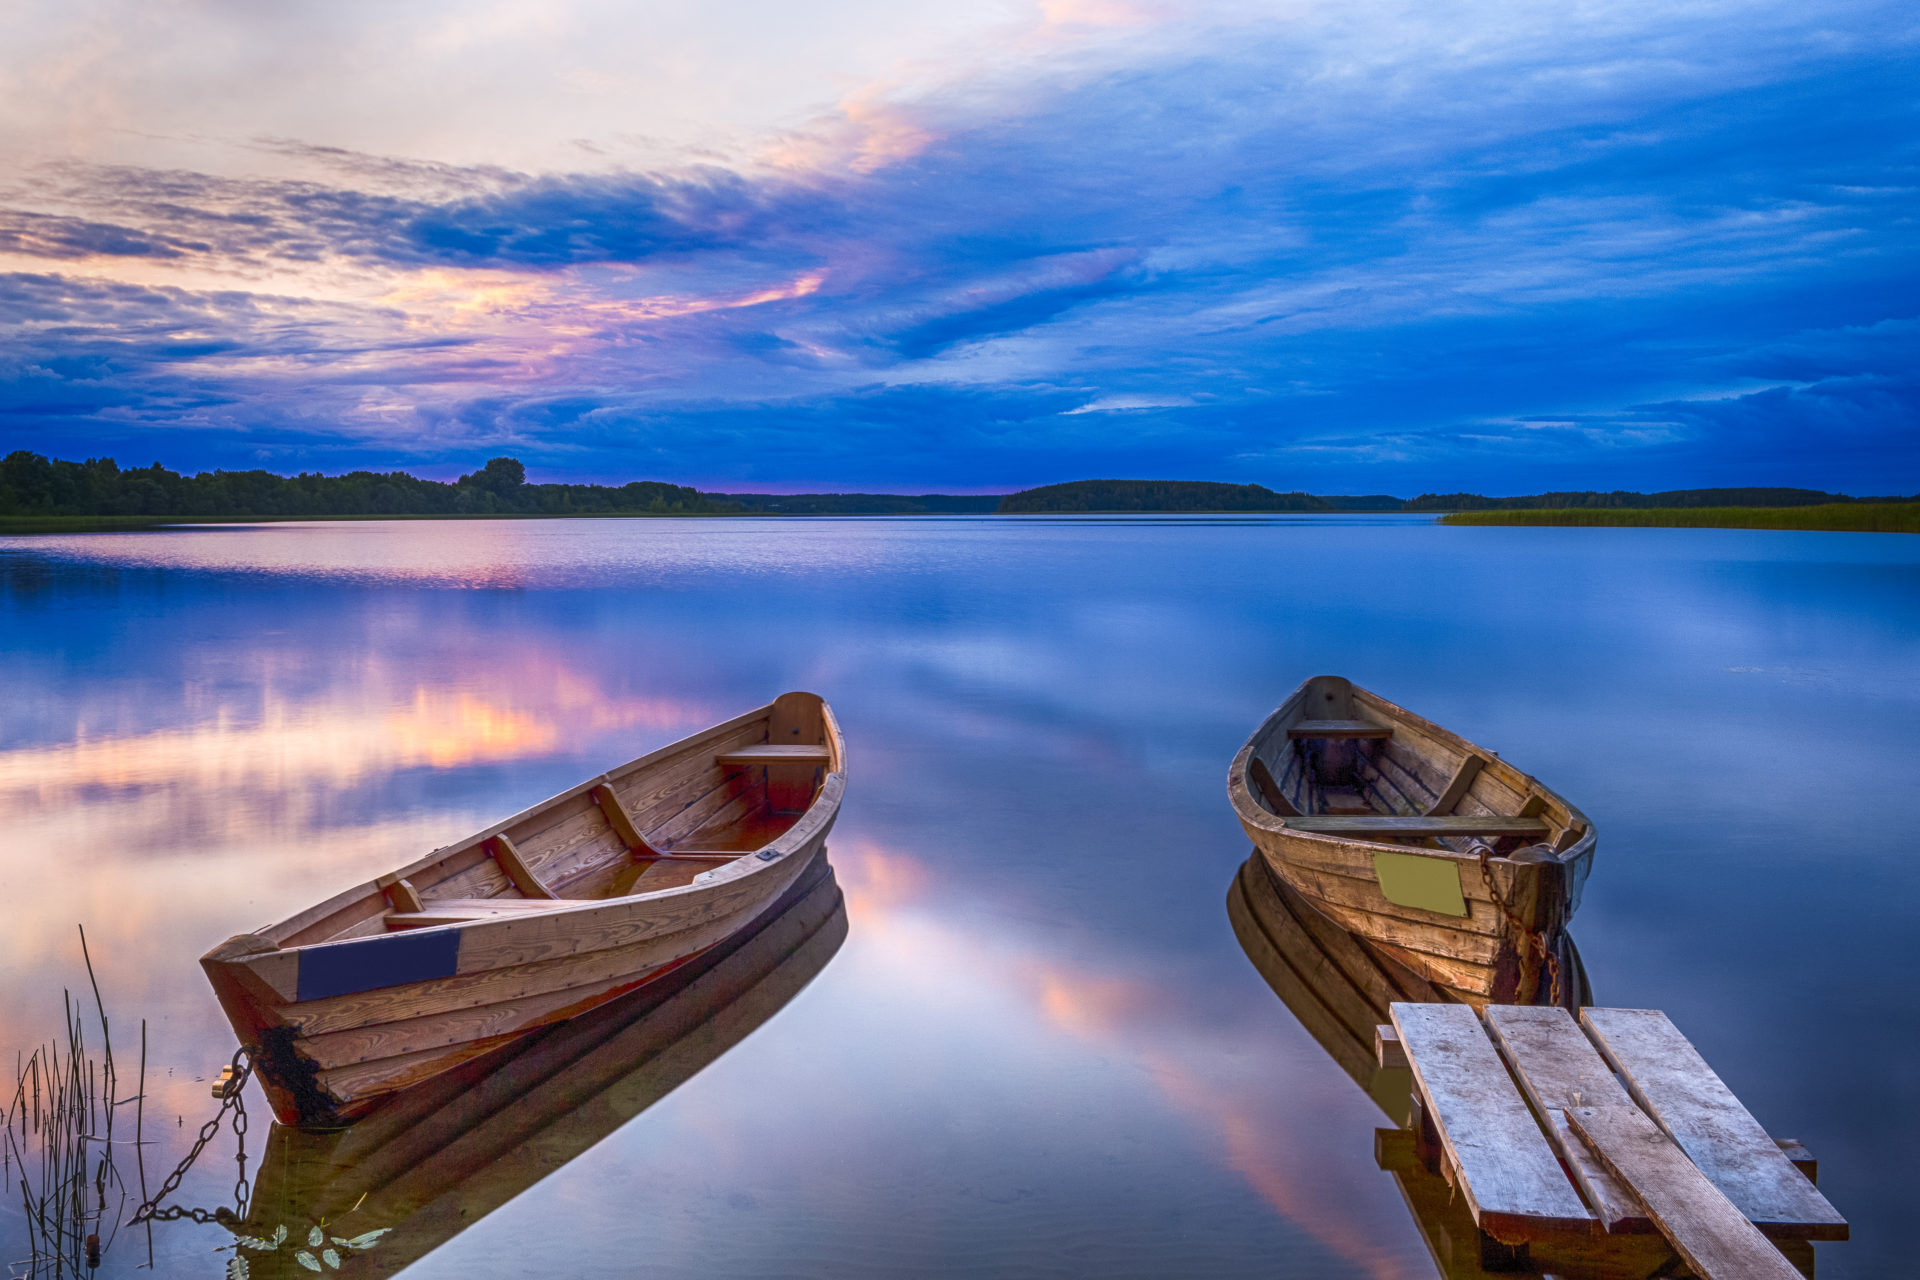 Lake Strusto is located in one of four national parks in Belarus: Braslav.